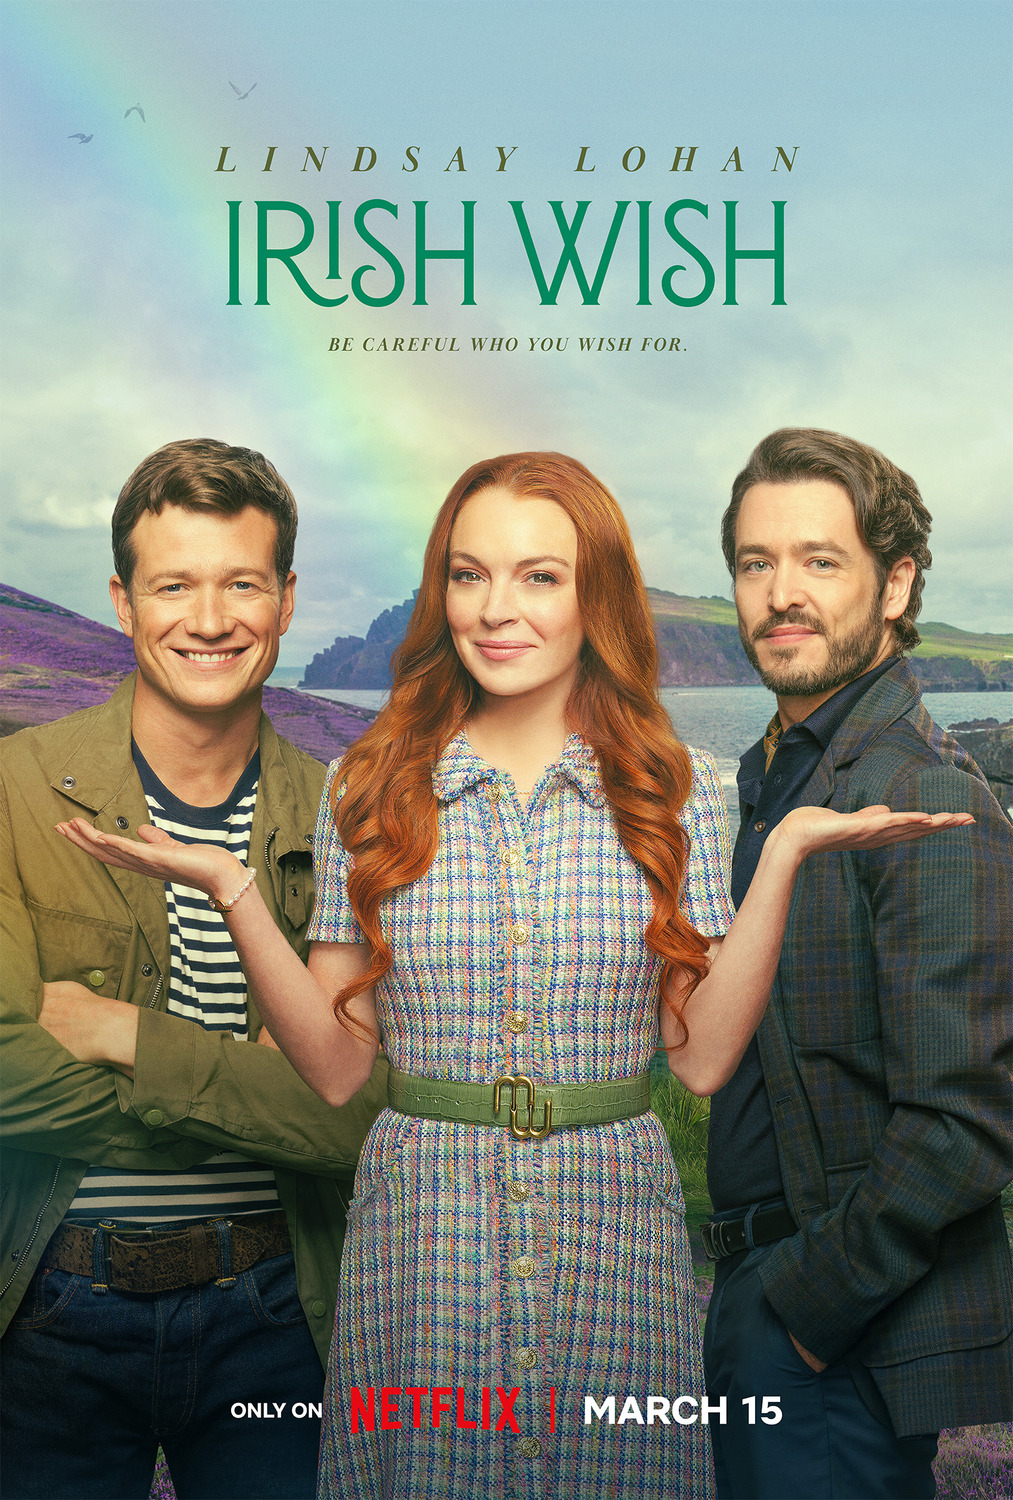 Extra Large Movie Poster Image for Irish Wish 